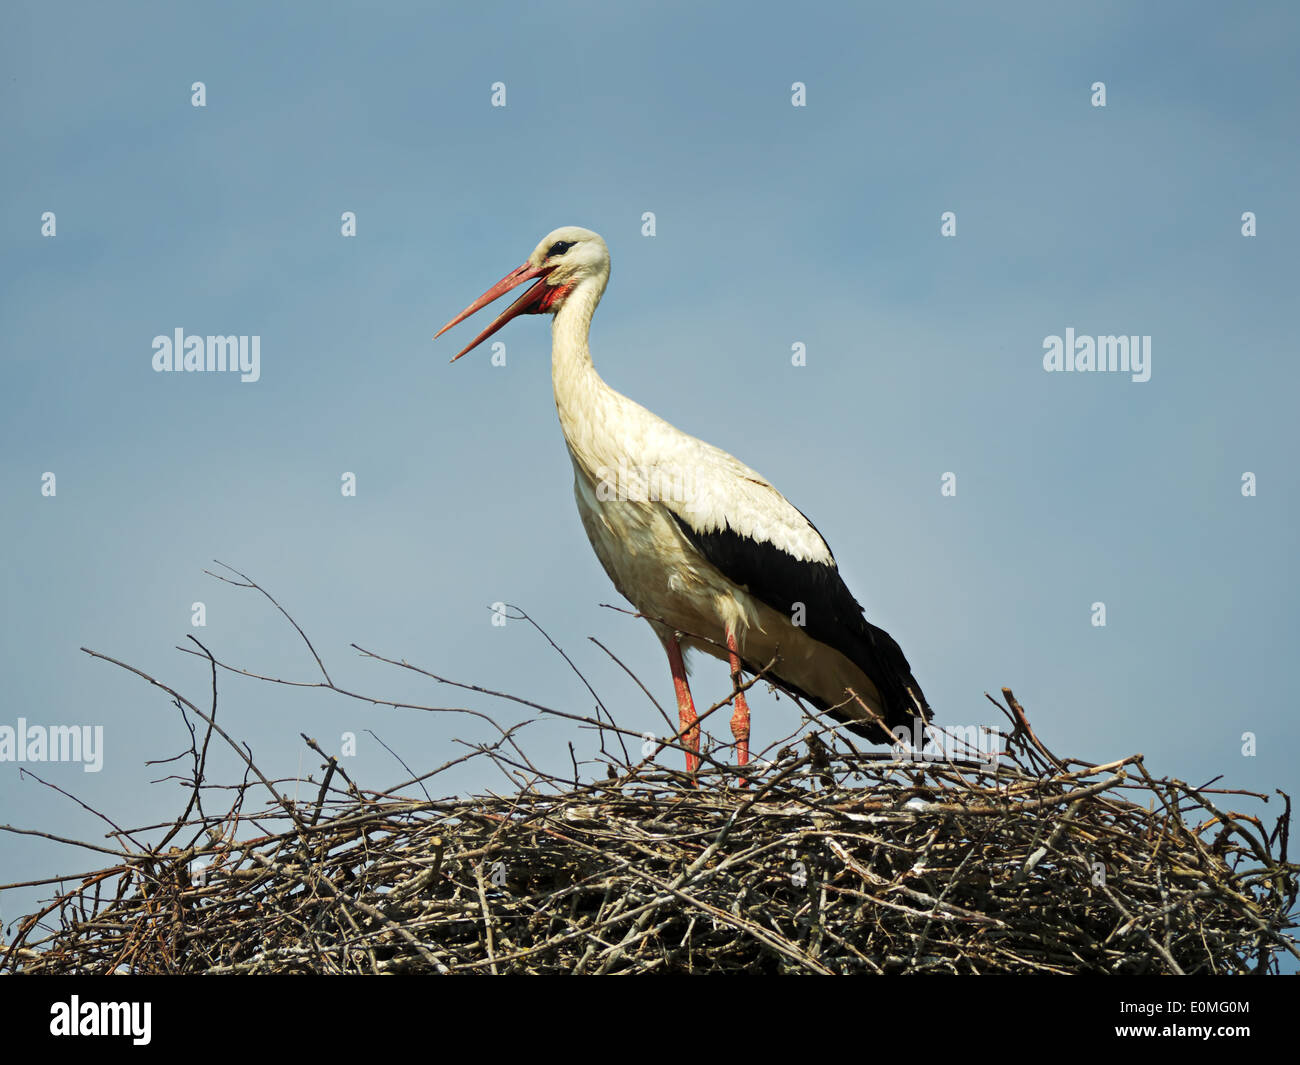 White stork in its nest over blue sky Stock Photo